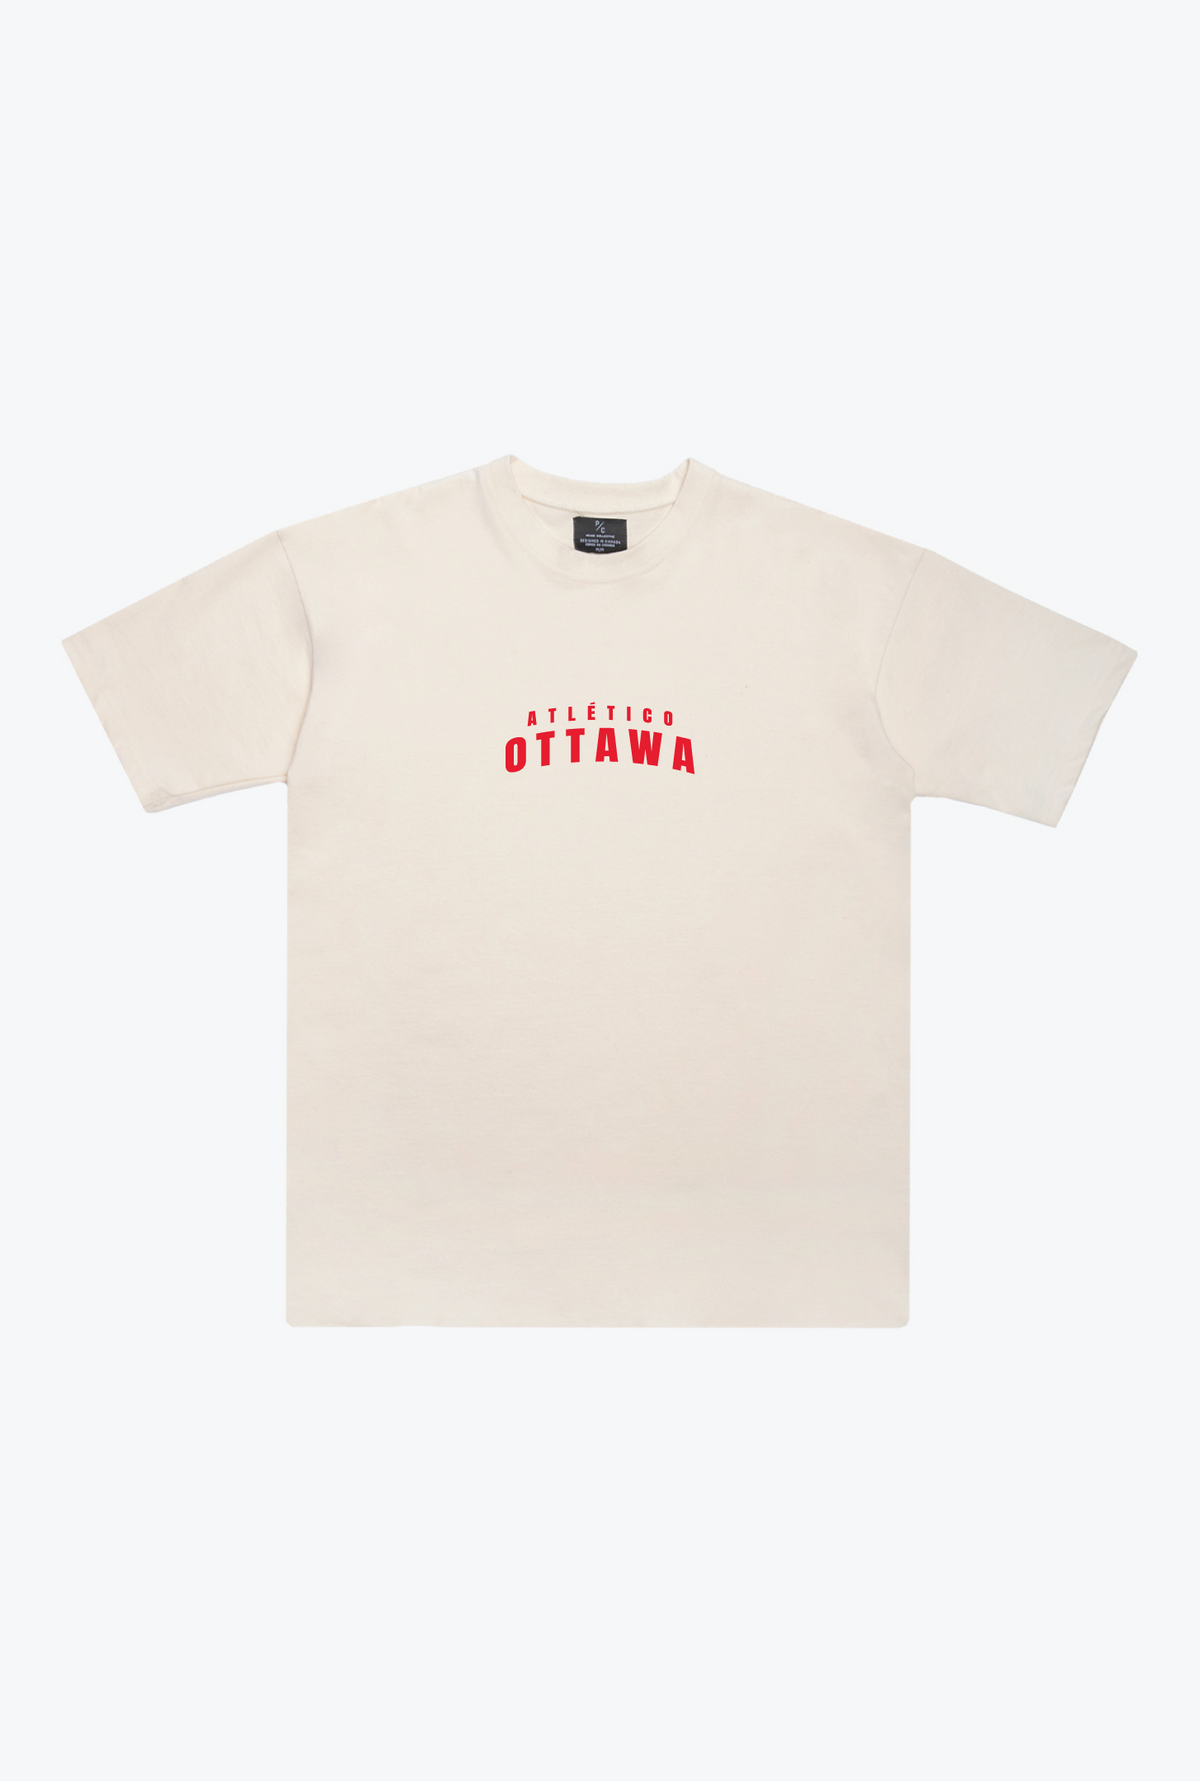 Atletico Ottawa Heavyweight T-Shirt - Ivory